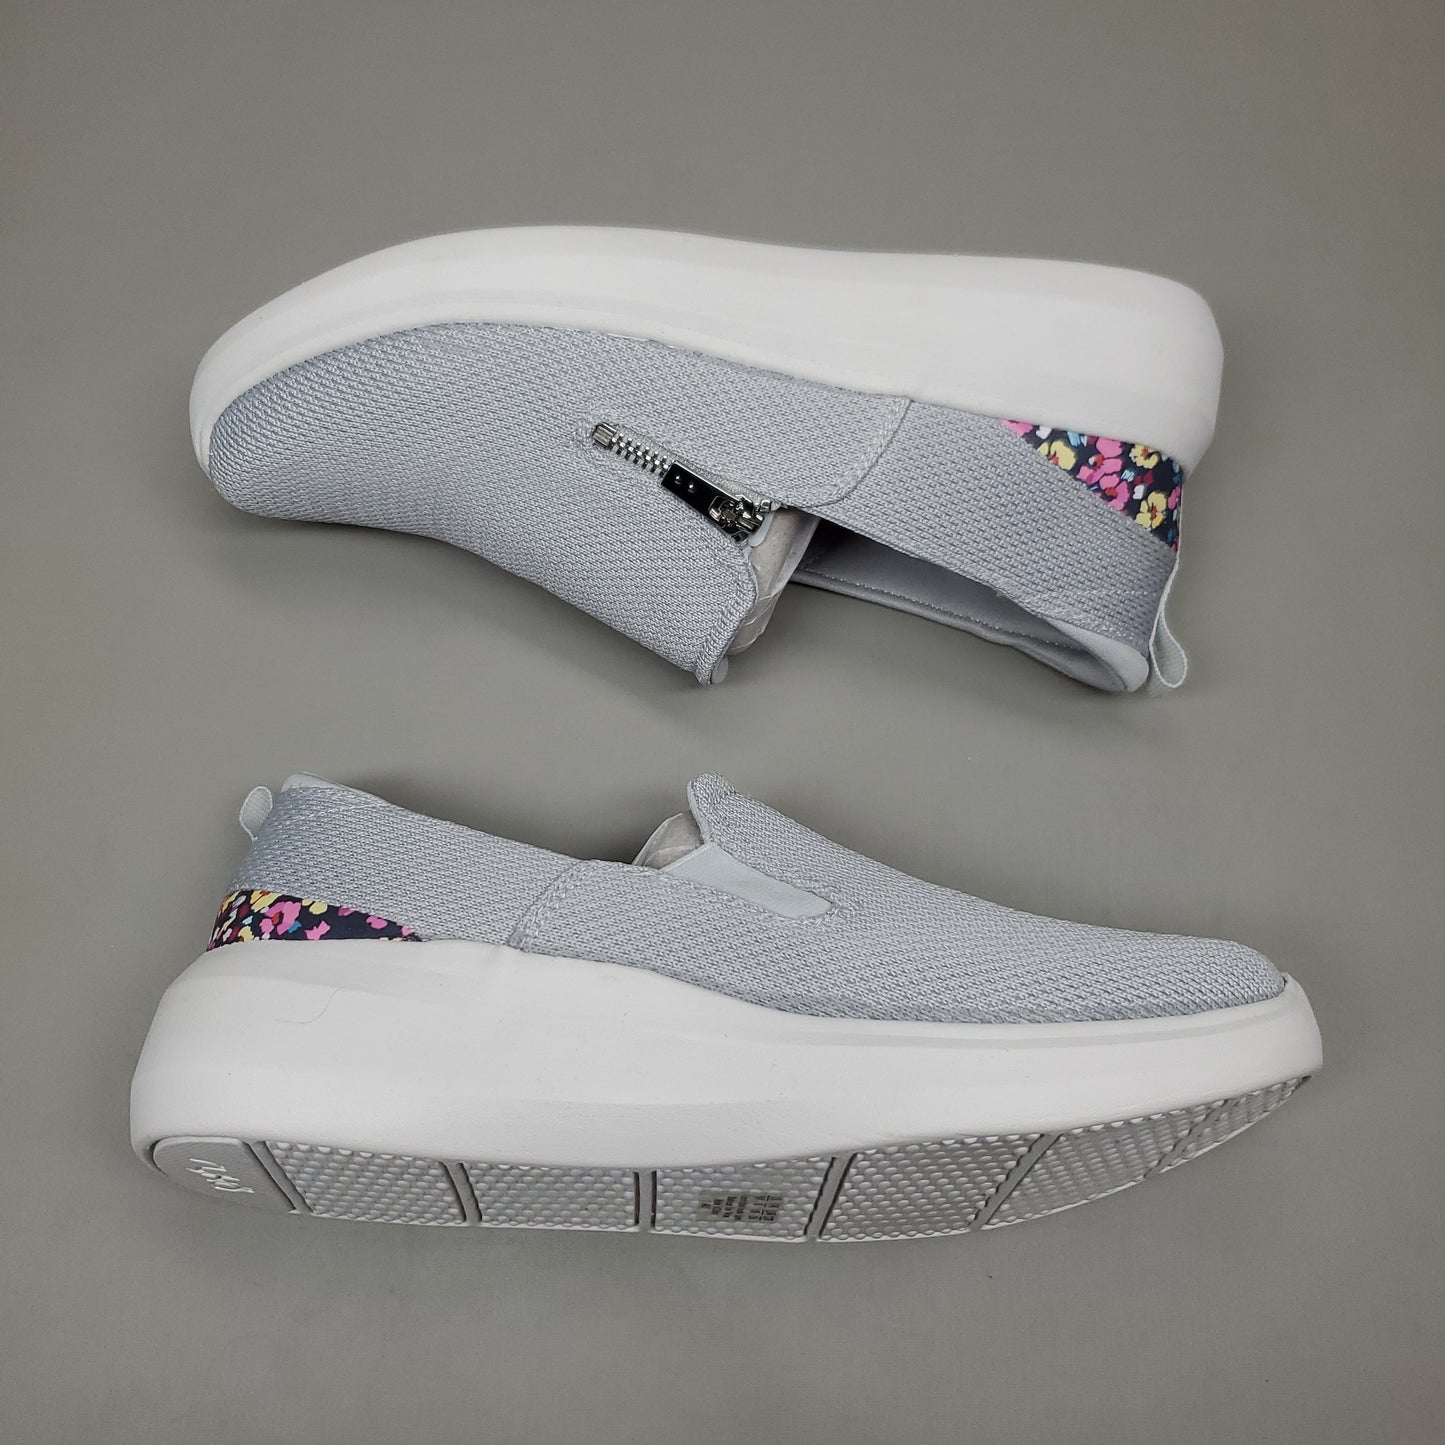 RYKA Mesh Walking Sneaker Shoes Women's SZ 8.5 W Ally Floral Vapor Grey (New)